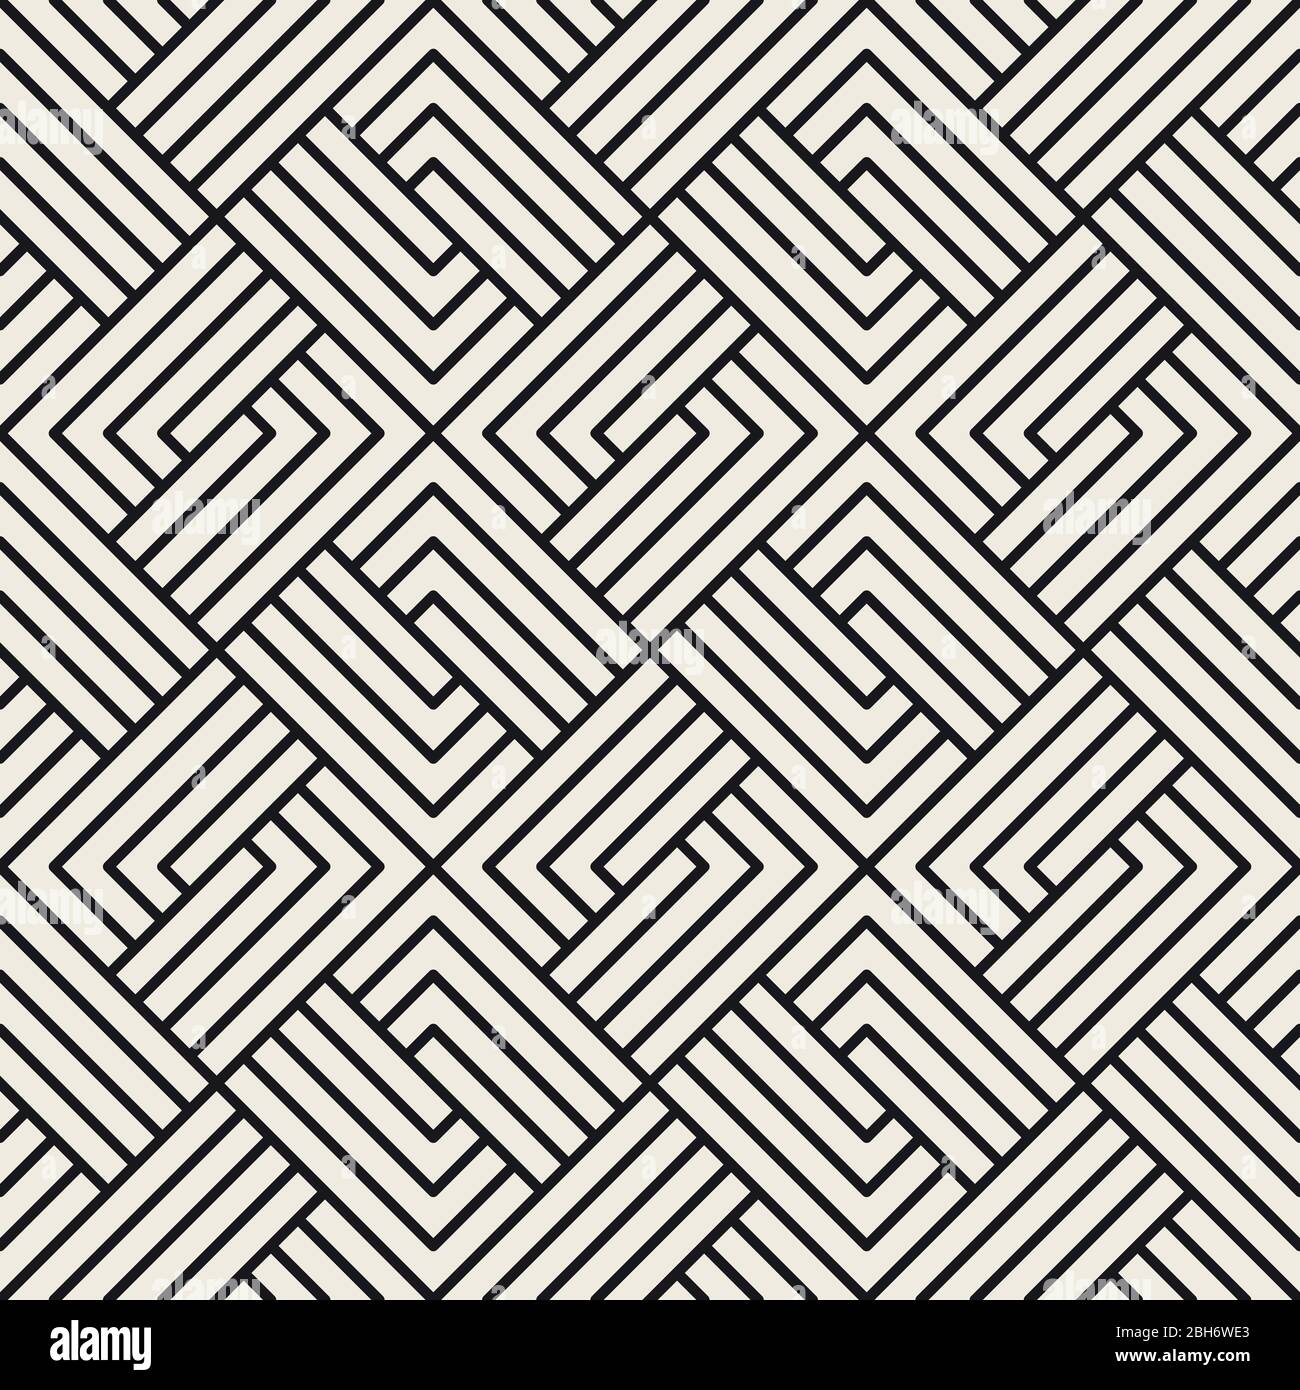 Vektor nahtlose Muster. Geometrische gestreifte Ornament. Monochrome Spirale Linien Gitter. Stock Vektor